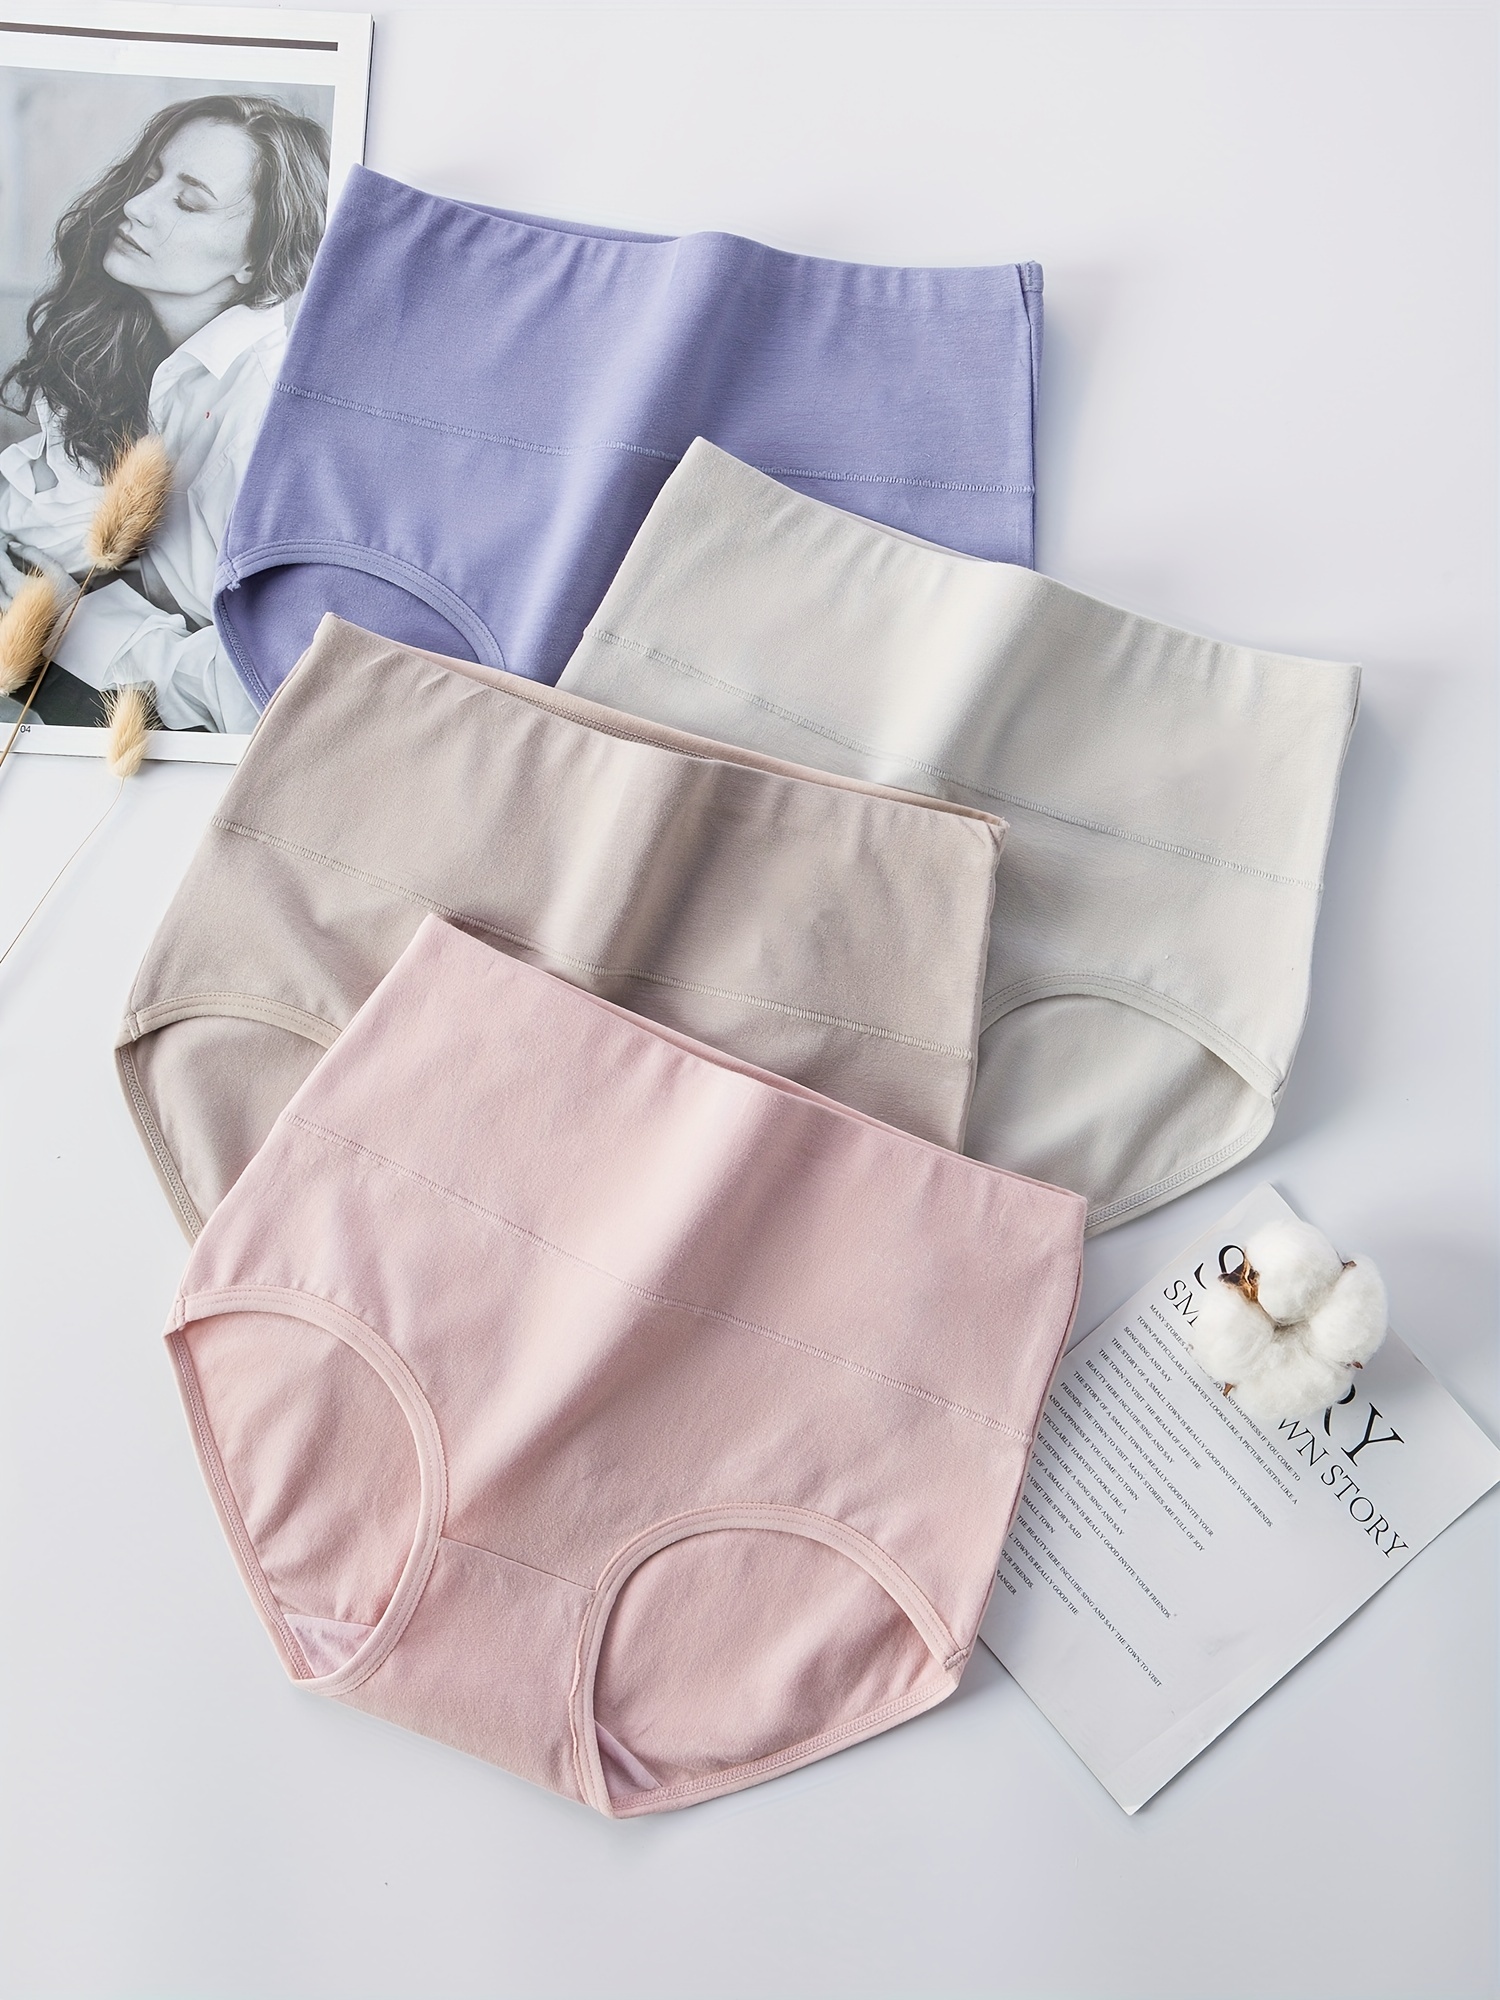 4PCS Pure Cotton Panties Breathable Women Underwear Seamless Soft